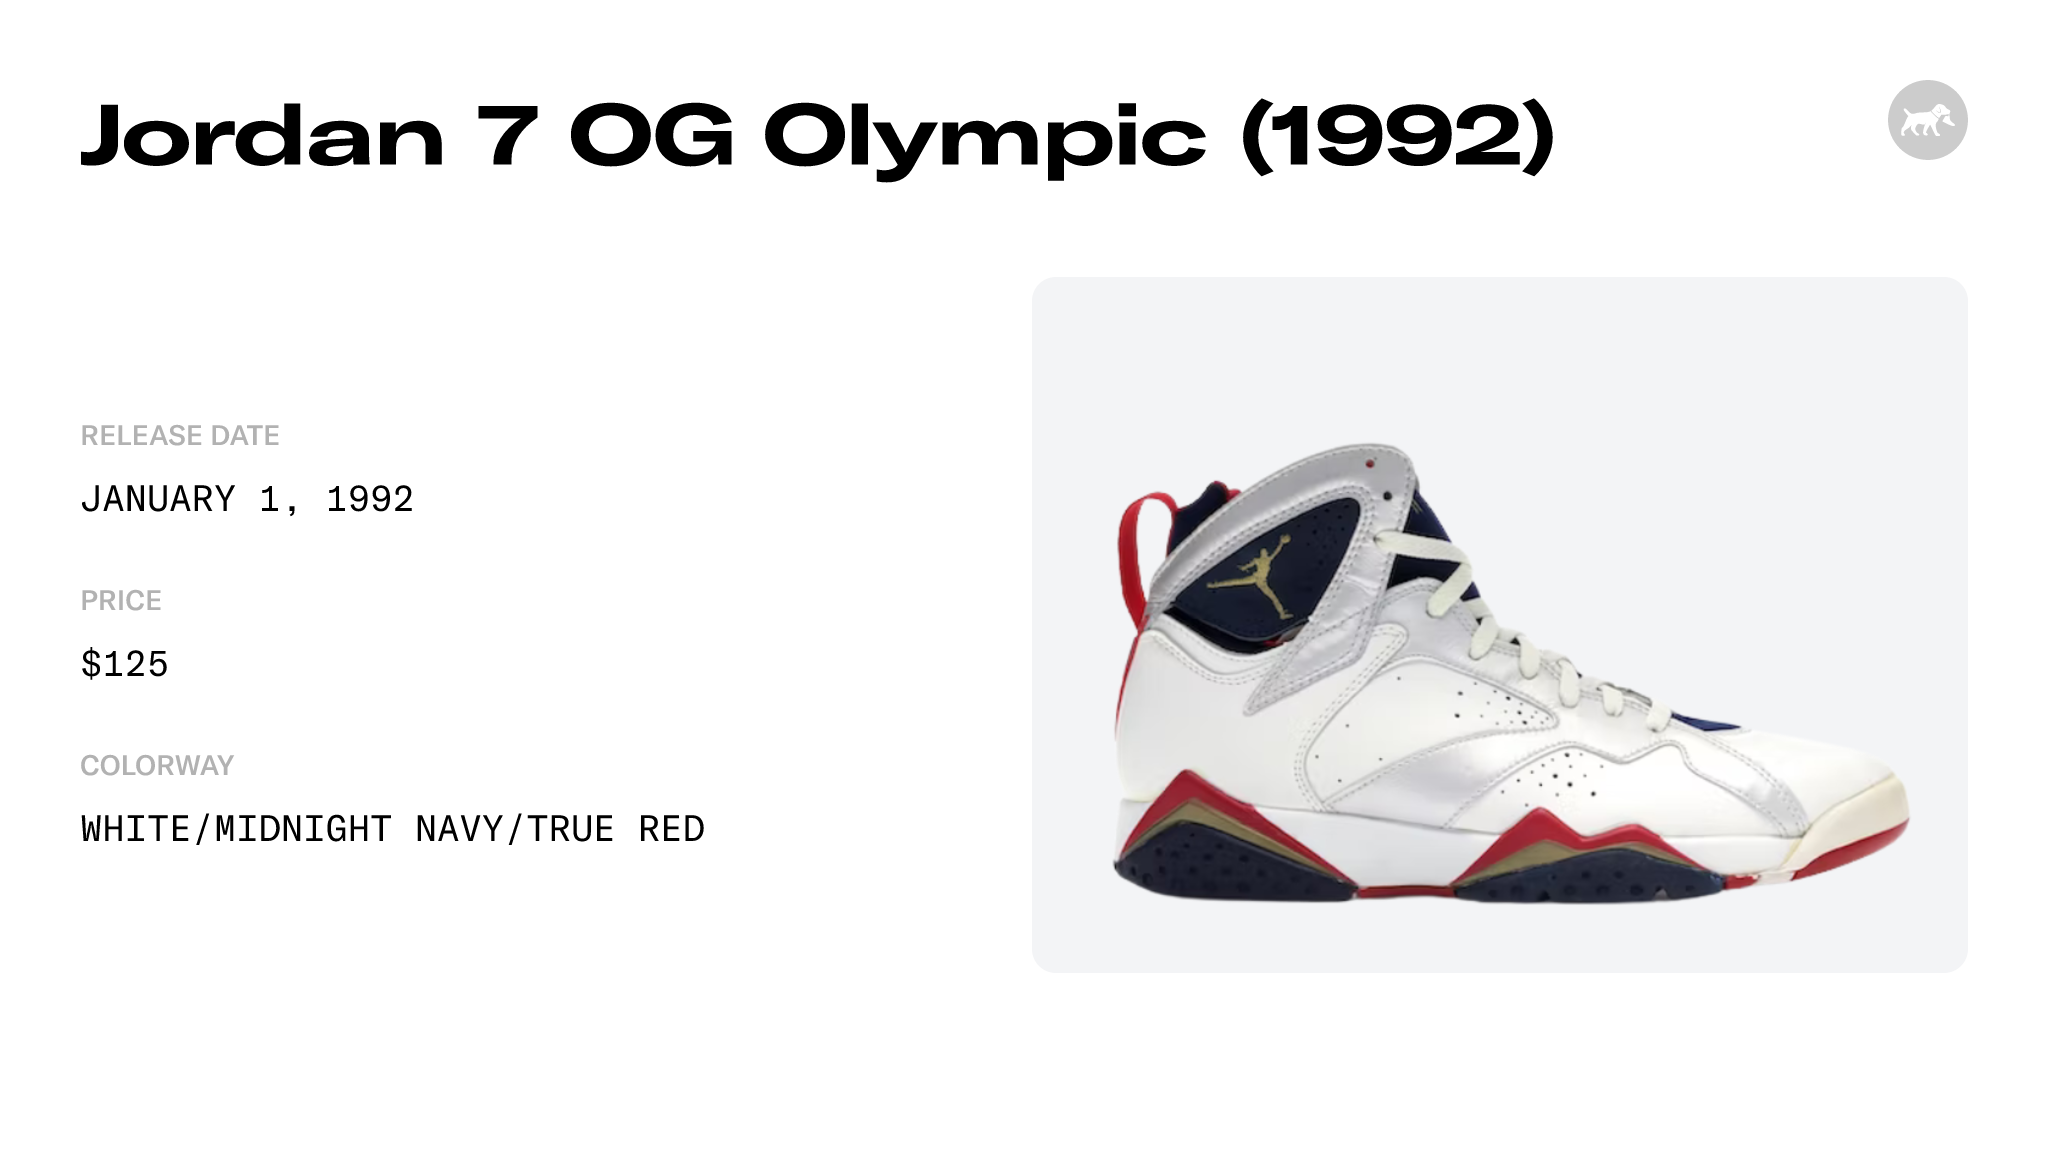 Jordan 7 OG Olympic (1992) - 130157-110 Raffles and Release Date